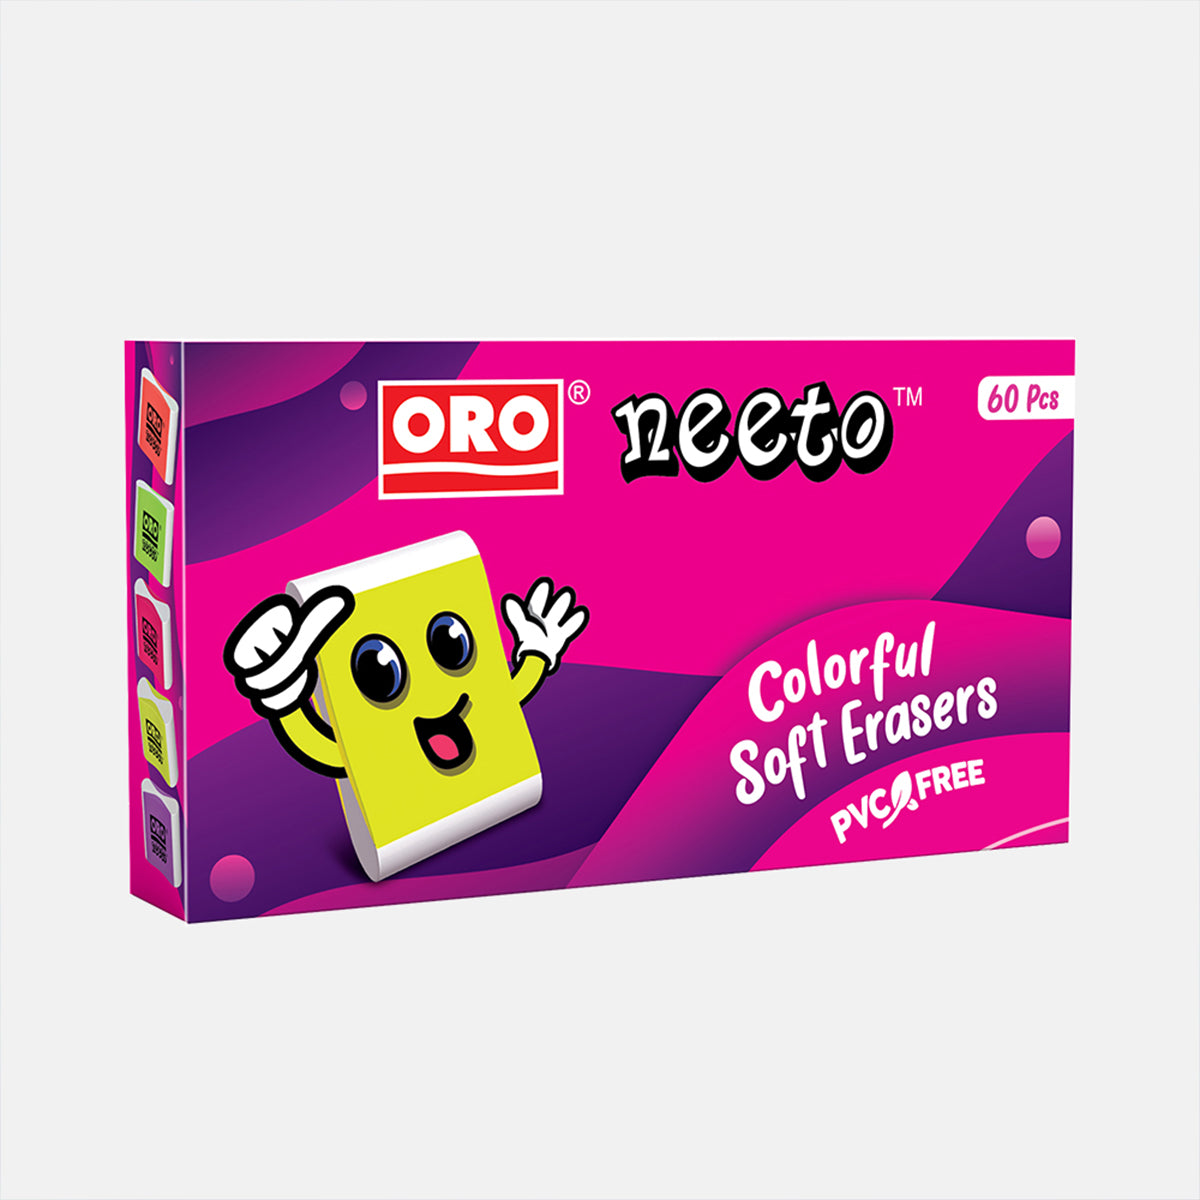 NEETO Colorful Soft Erasers 60 Pcs